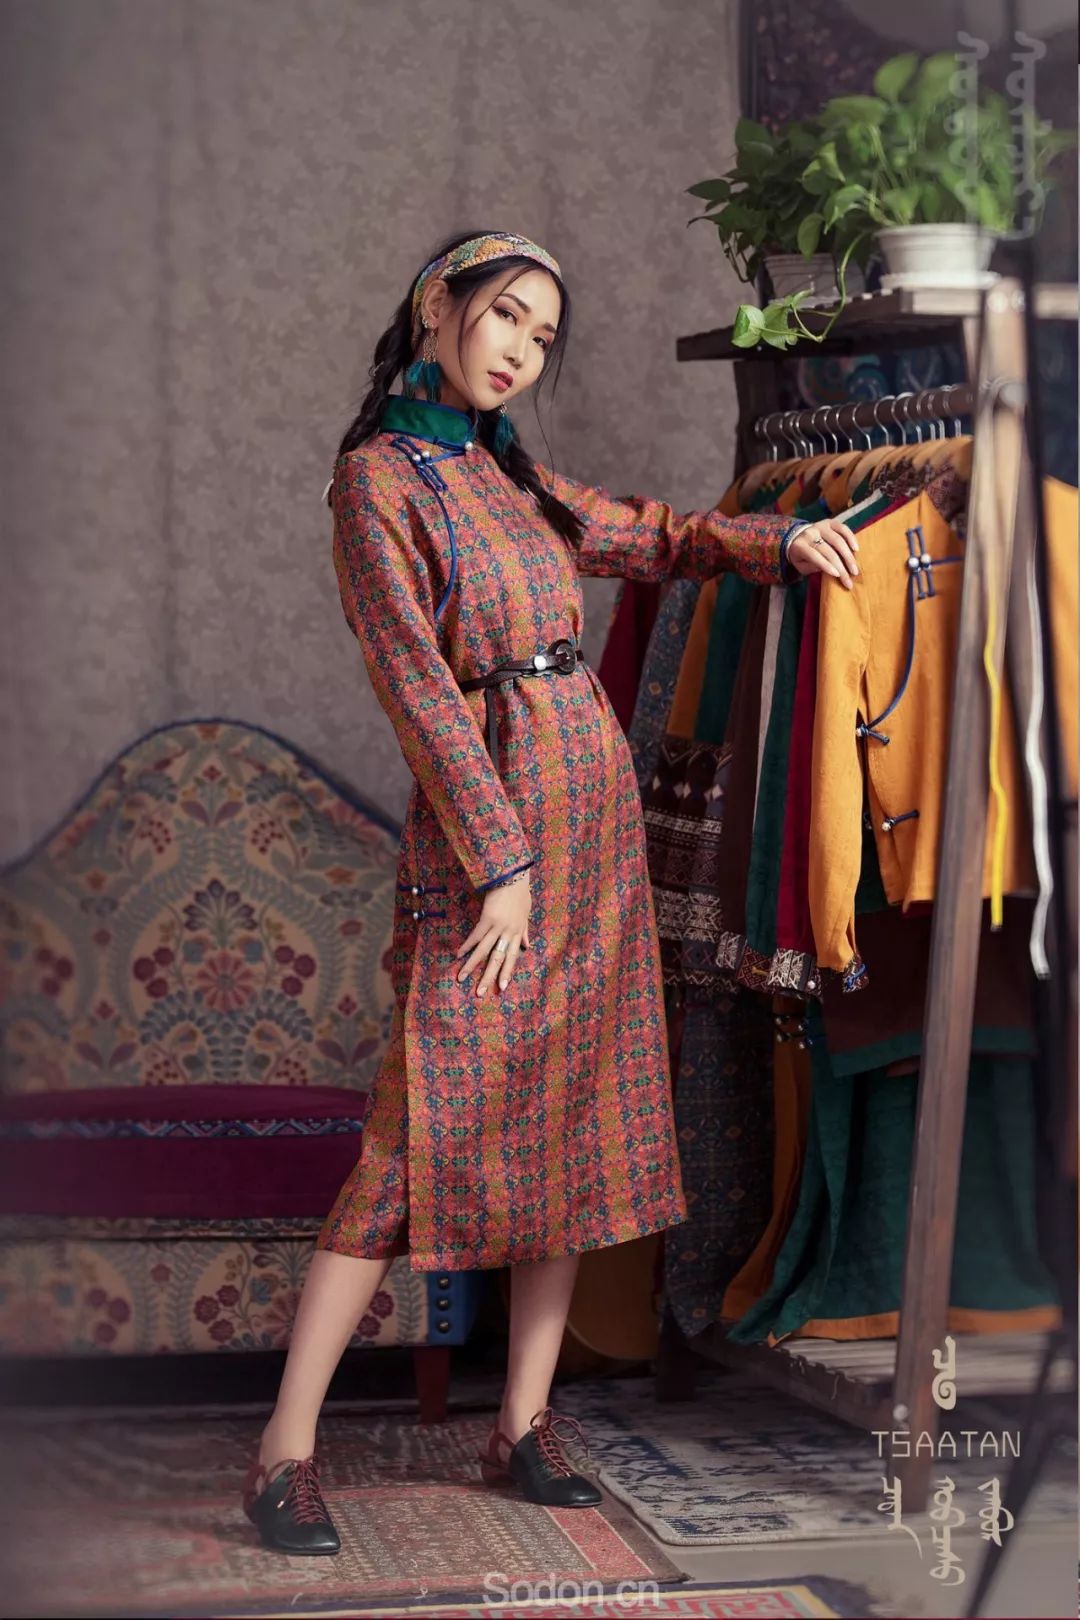 TSAATAN蒙古时装 2019夏季新款首发 第28张